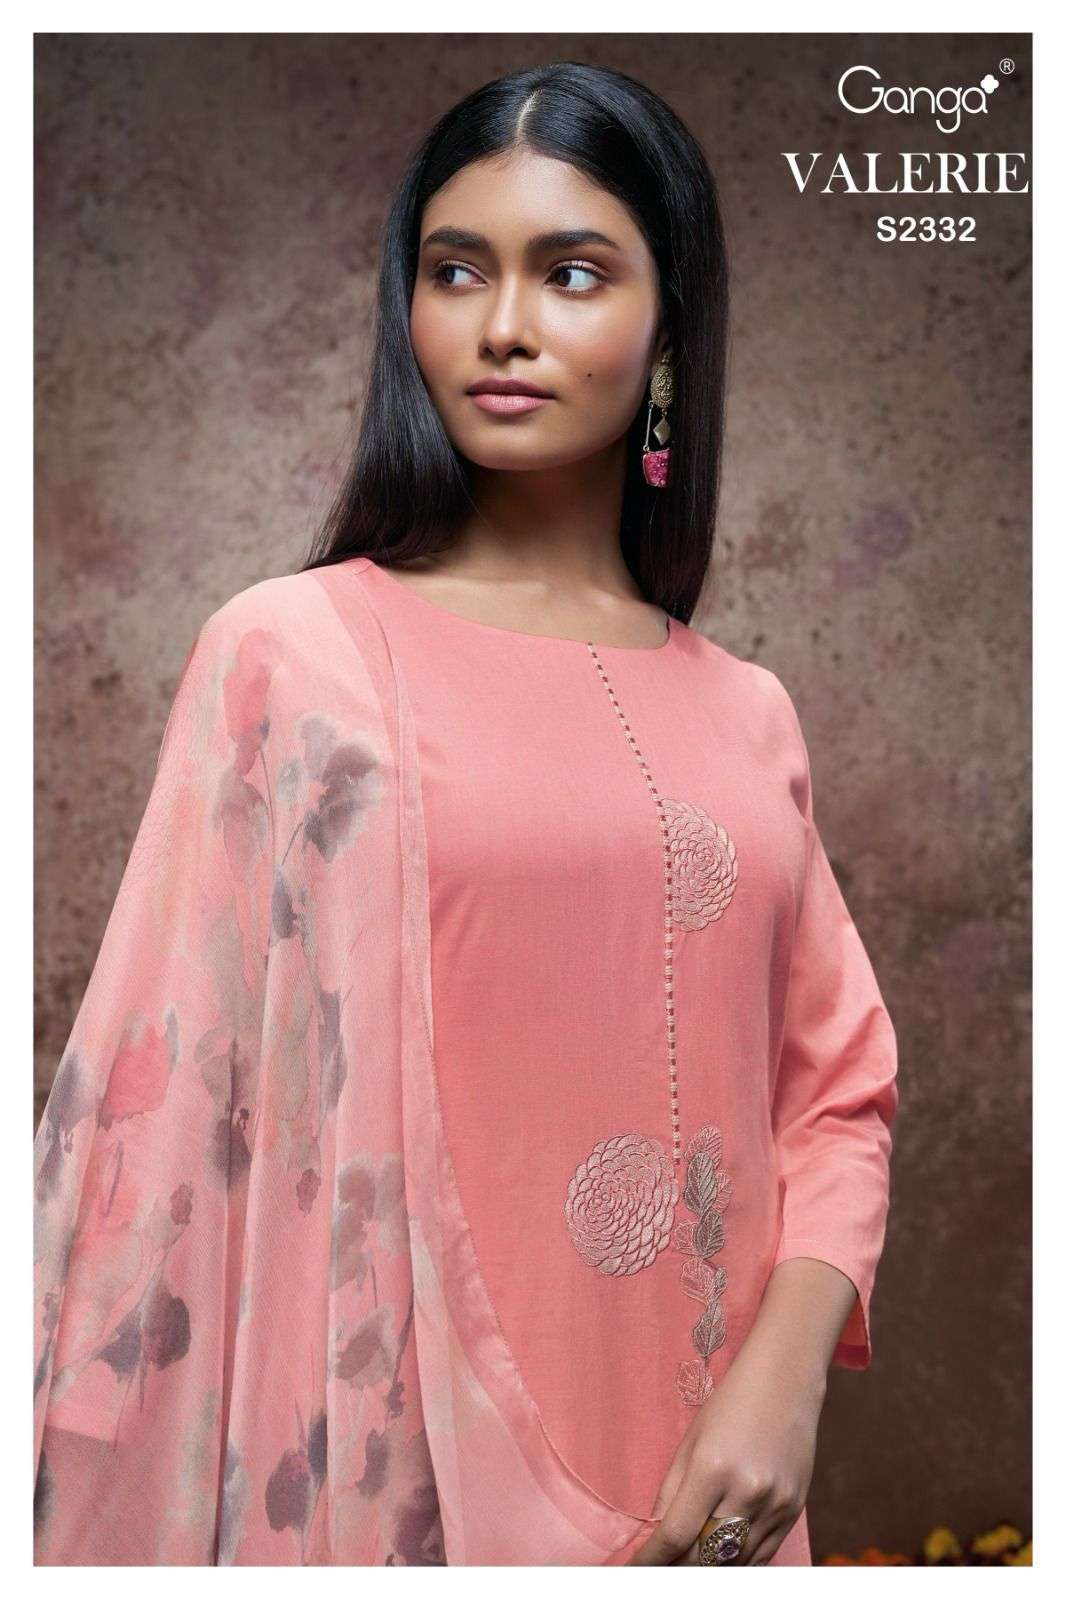 Ganga Valerie 2332 Fancy Cotton Salwar Suit Catalog Dealers